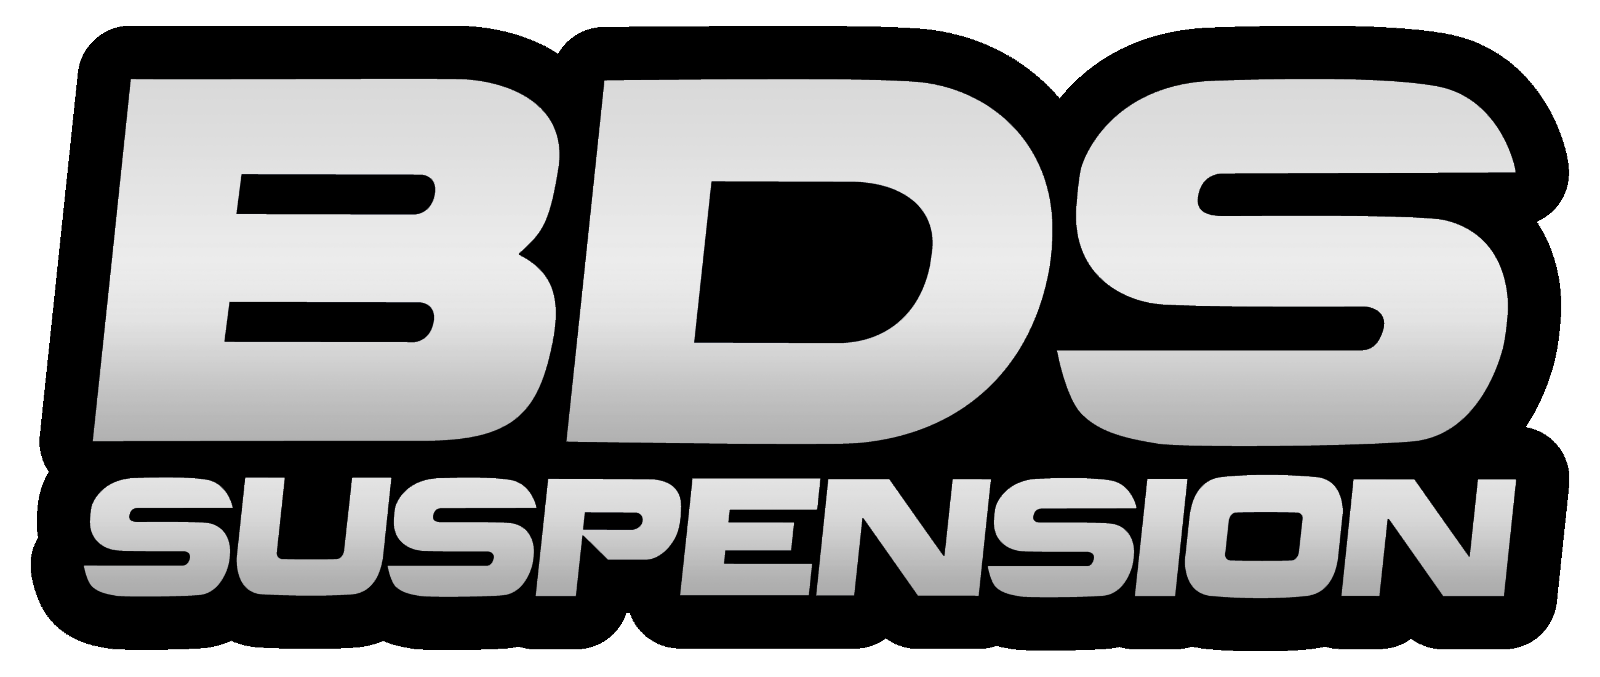 BDS BDS181H 4.5 Inch Lift Kit Chevy Silverado or GMC Sierra 1500 (99-06) 4WD